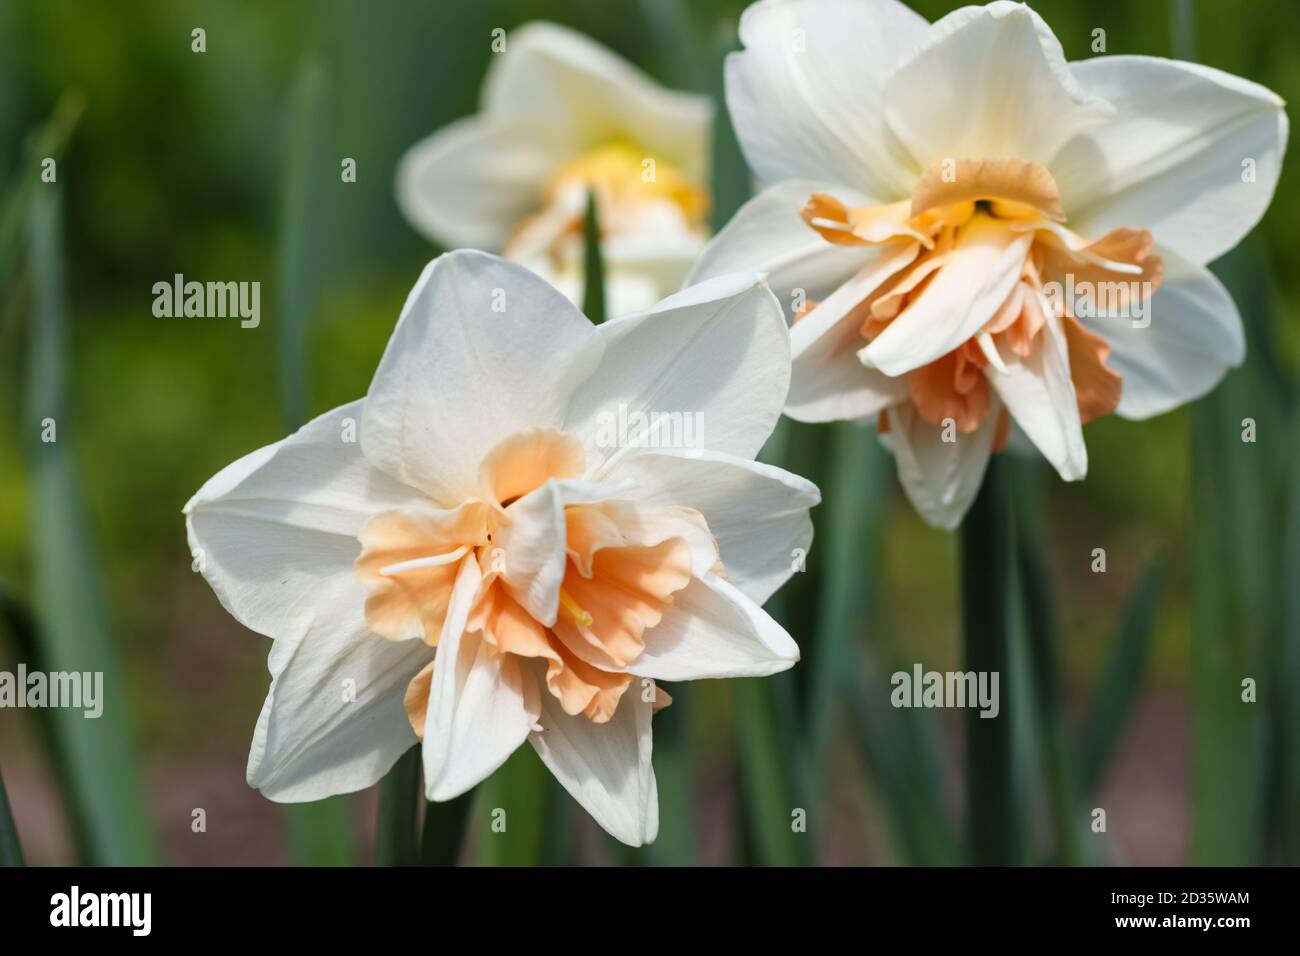 jonquille blanche (narcisse) avec centre orange et jaune Photo Stock - Alamy